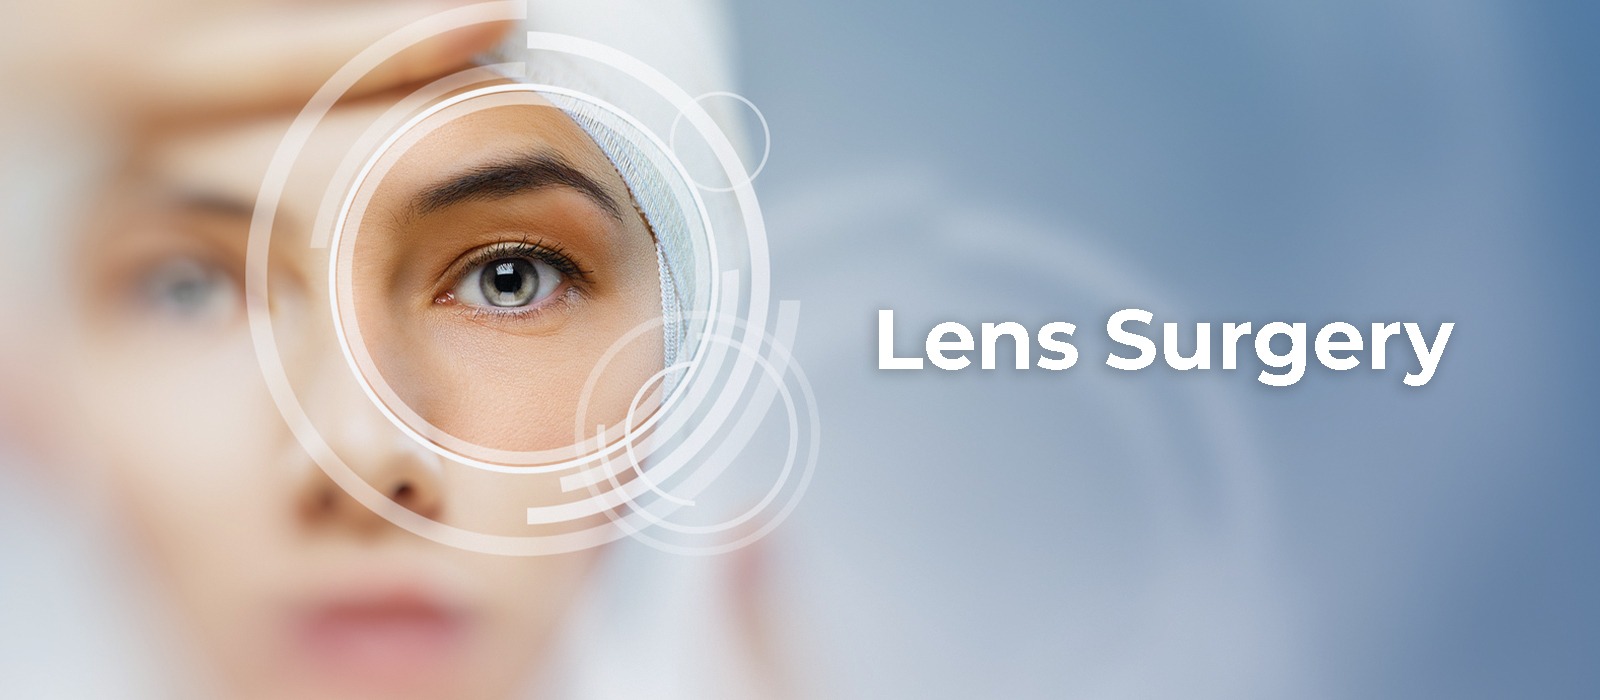 Lens surgery